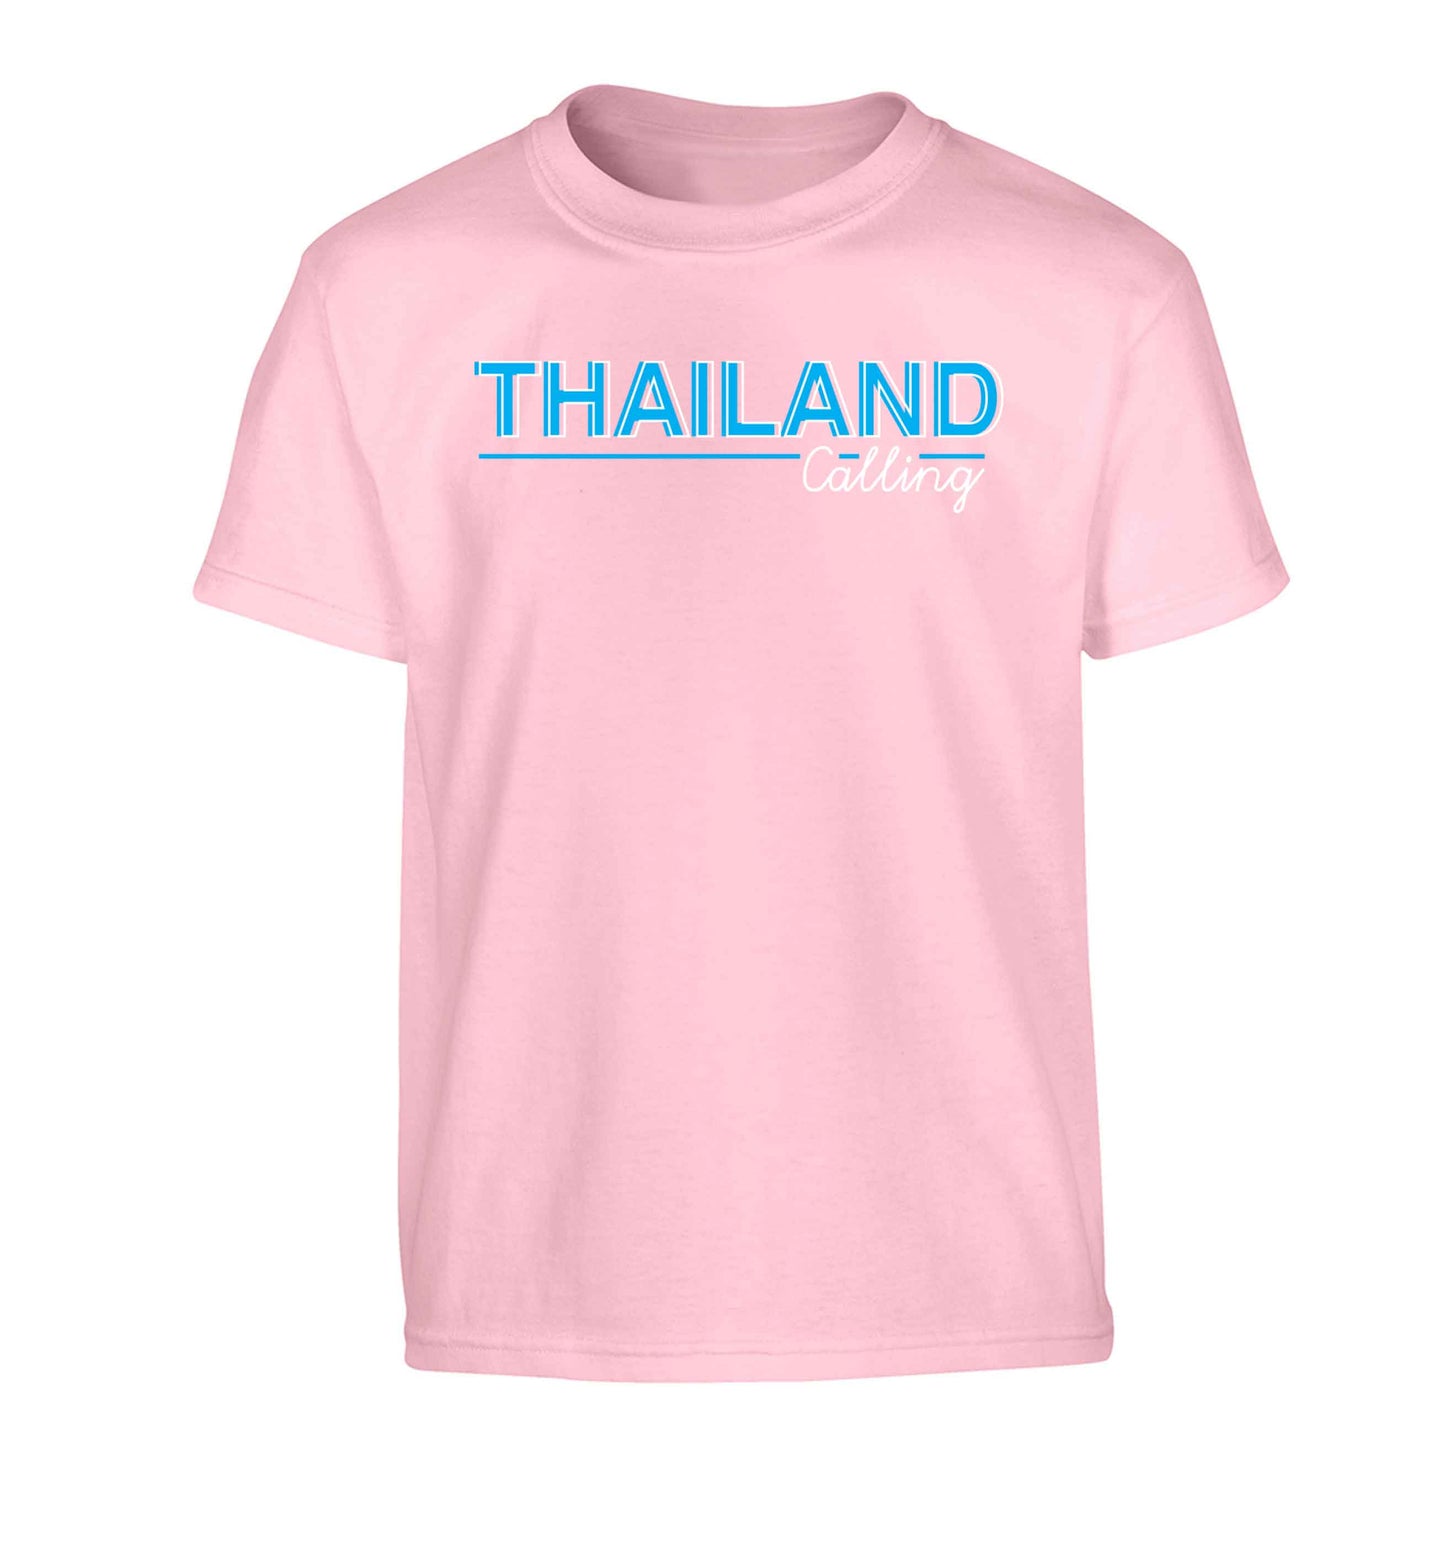 Thailand calling Children's light pink Tshirt 12-13 Years